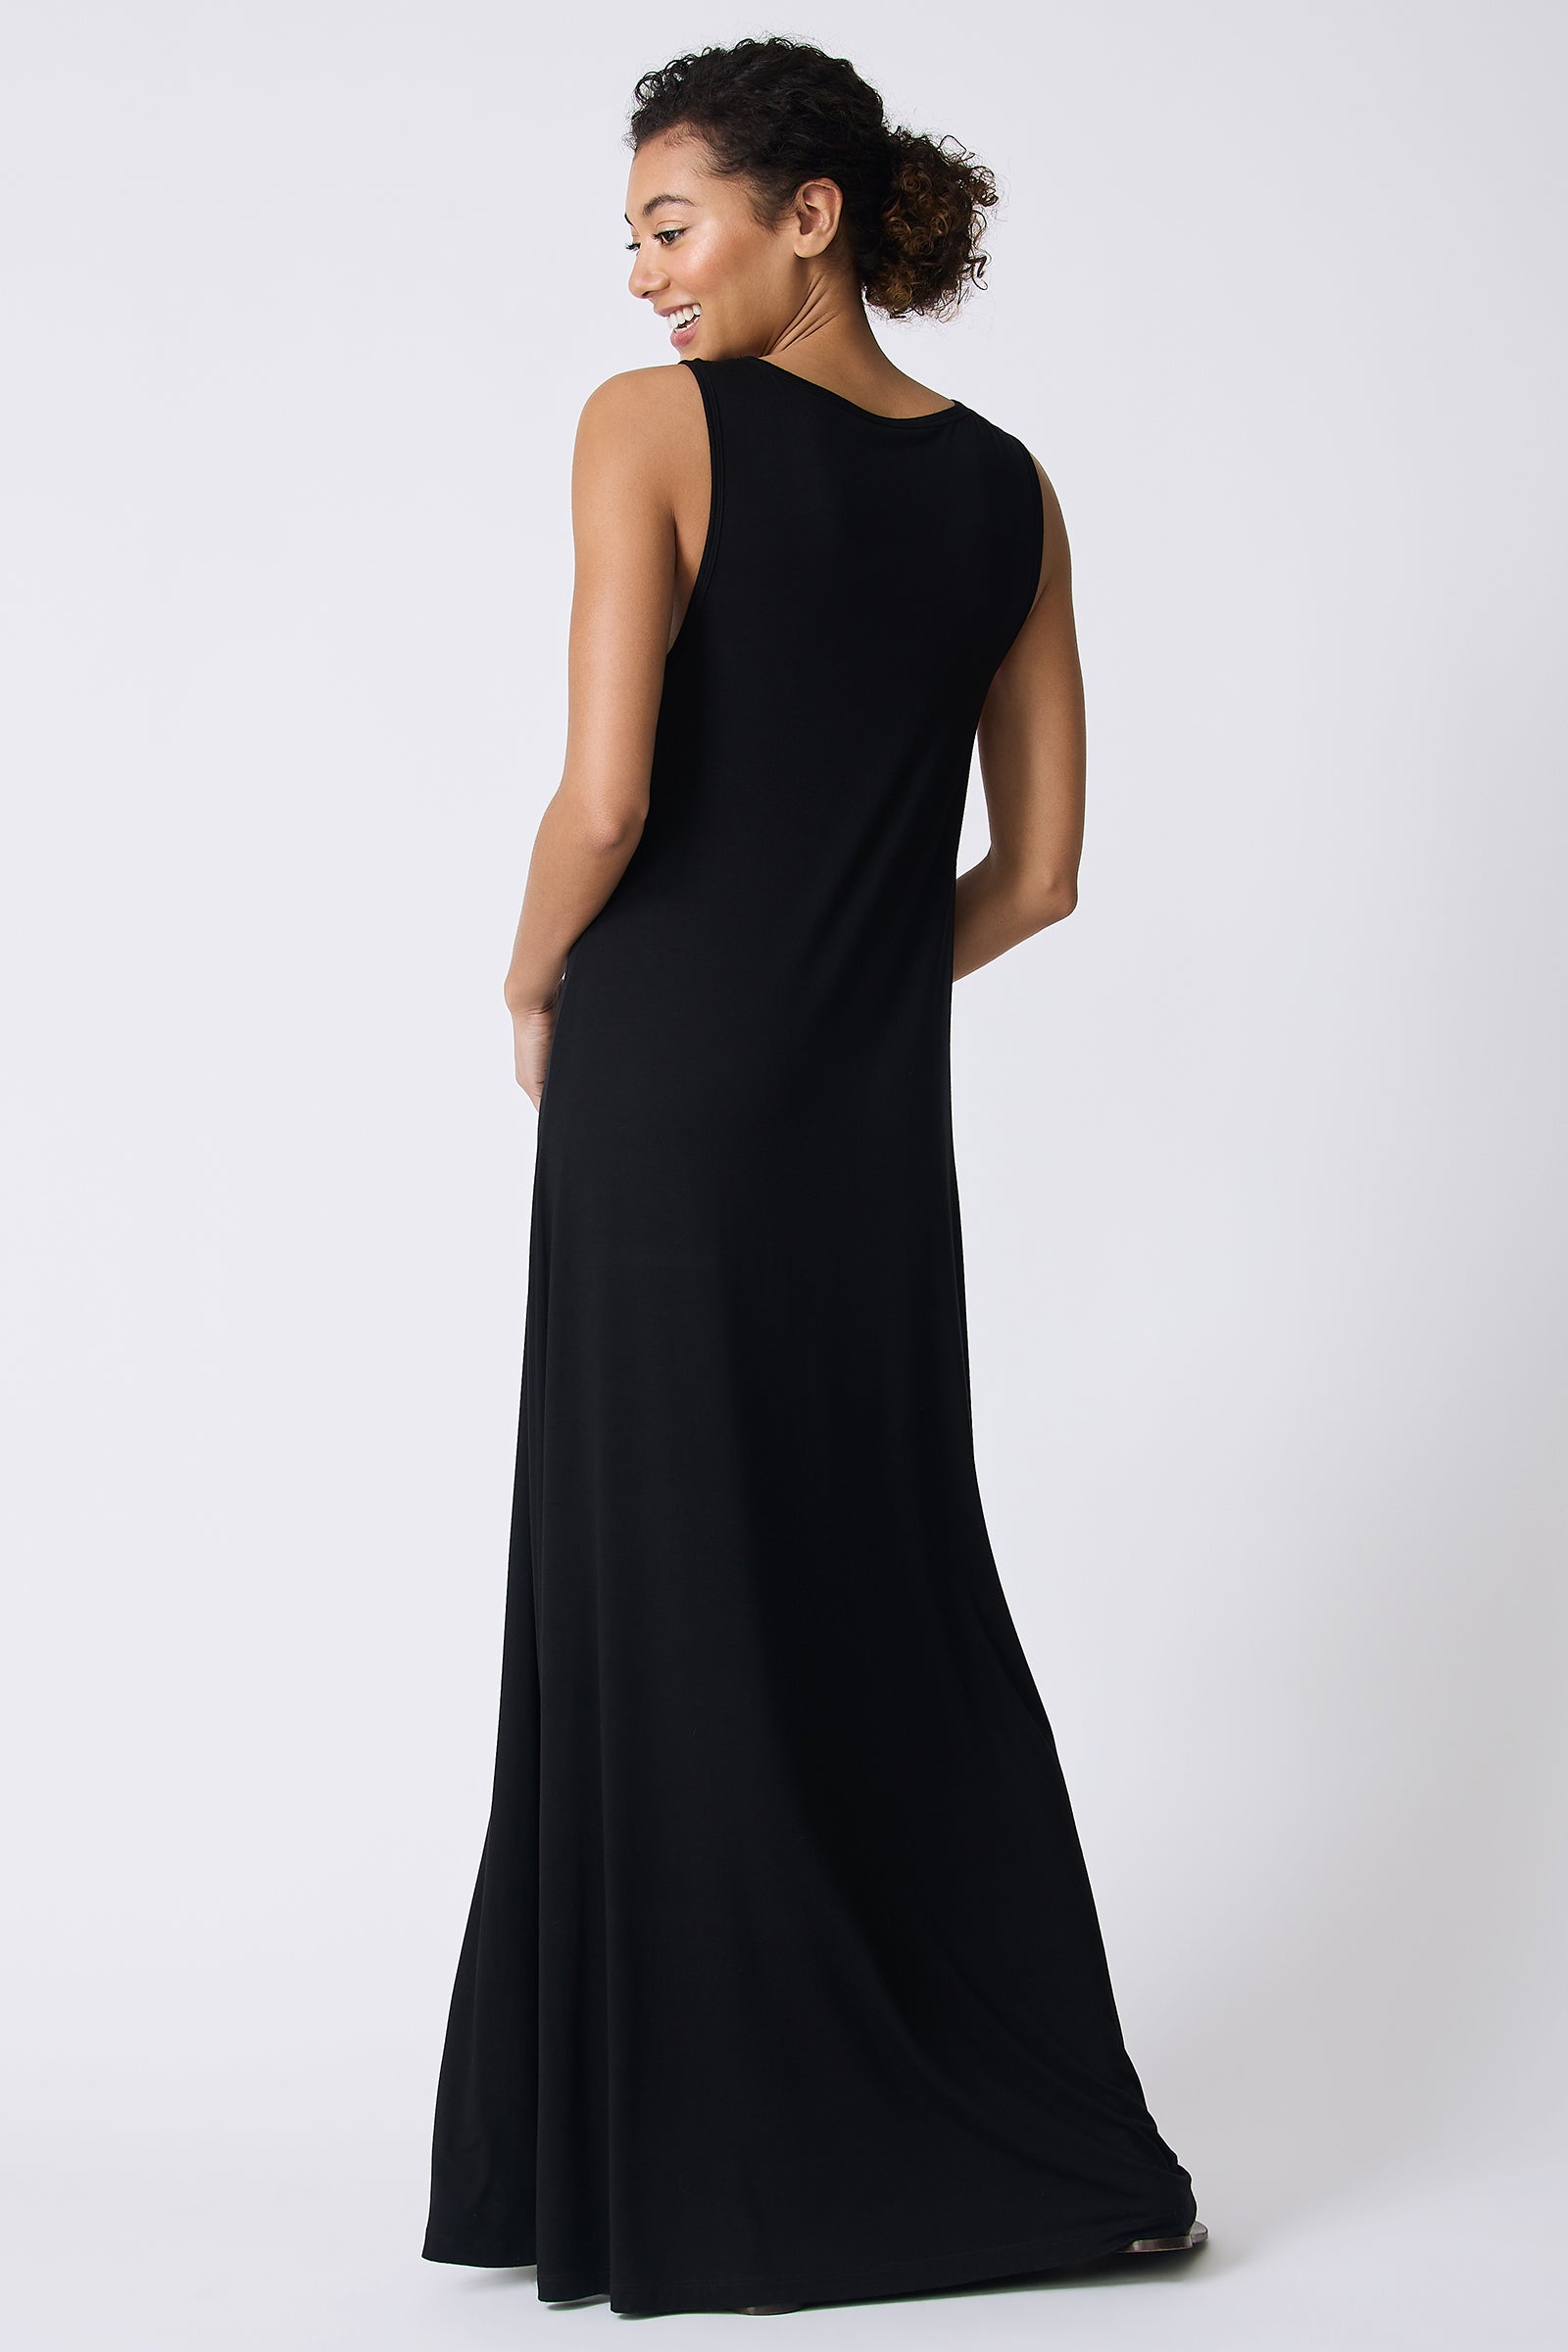 Kal Rieman Sophia Maxi Dress in Black on model full back view